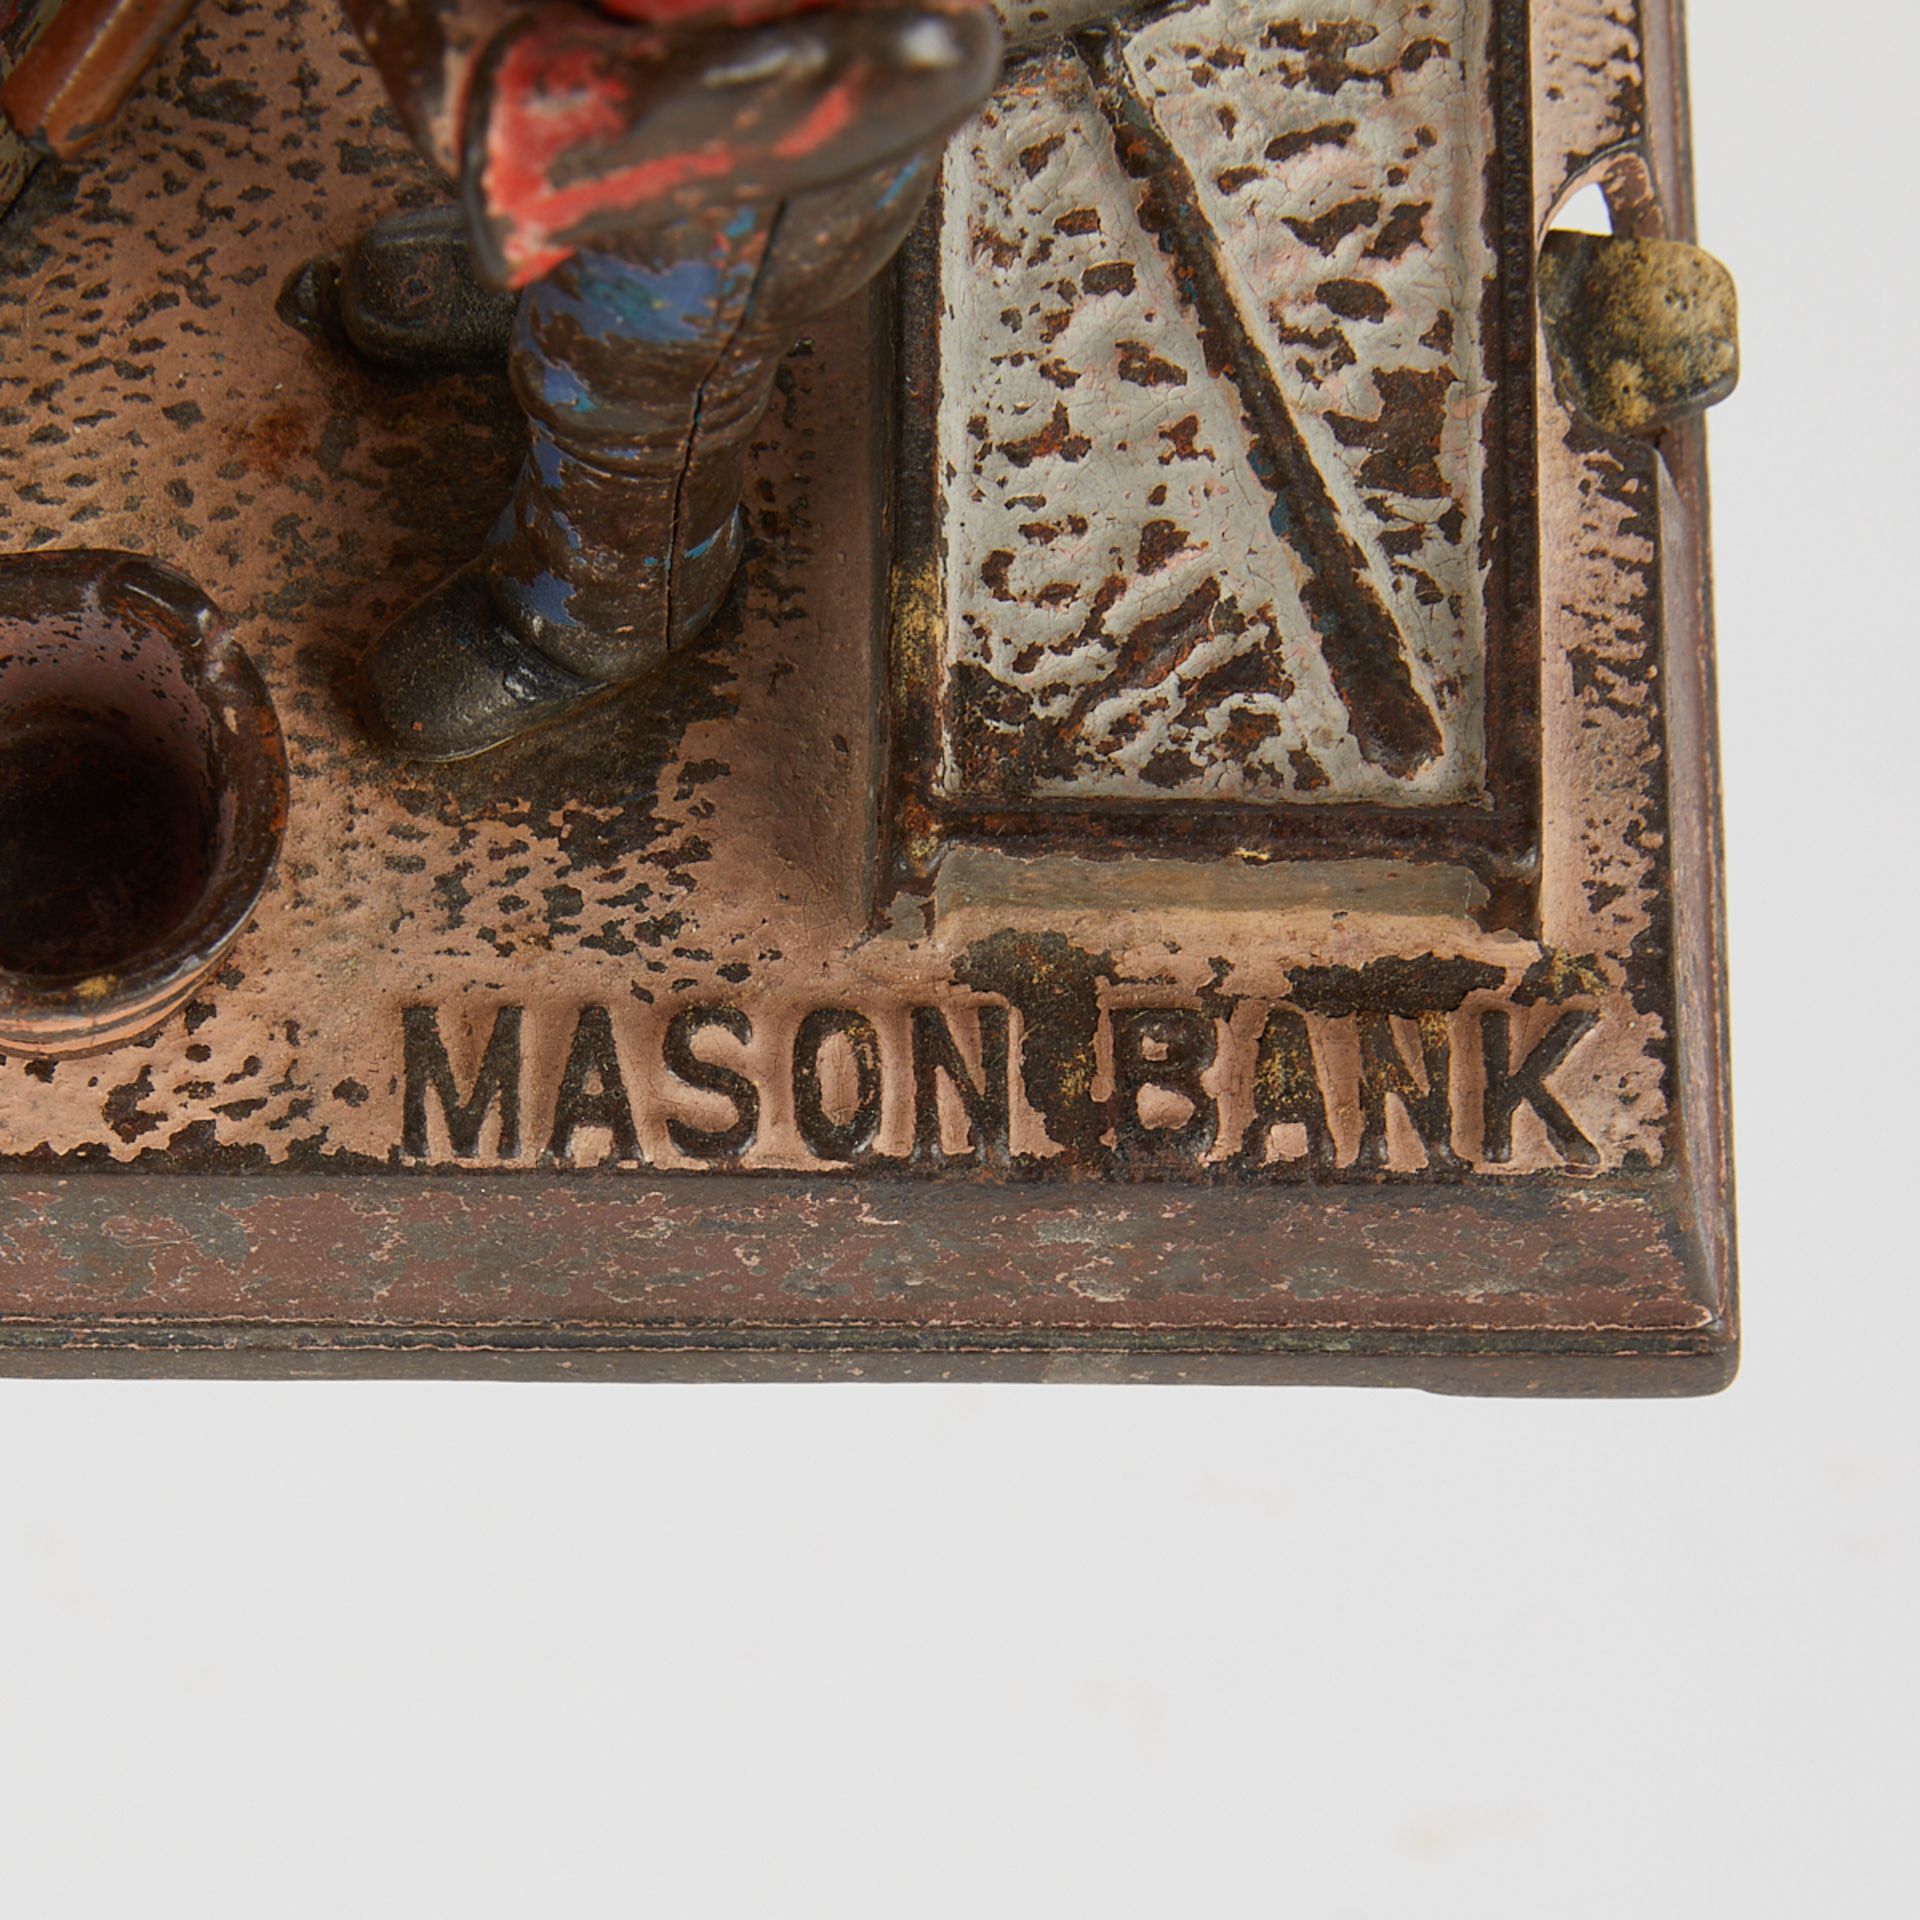 Shepard Hardware "Mason Bank" Mechanical Bank 1887 - Bild 9 aus 9